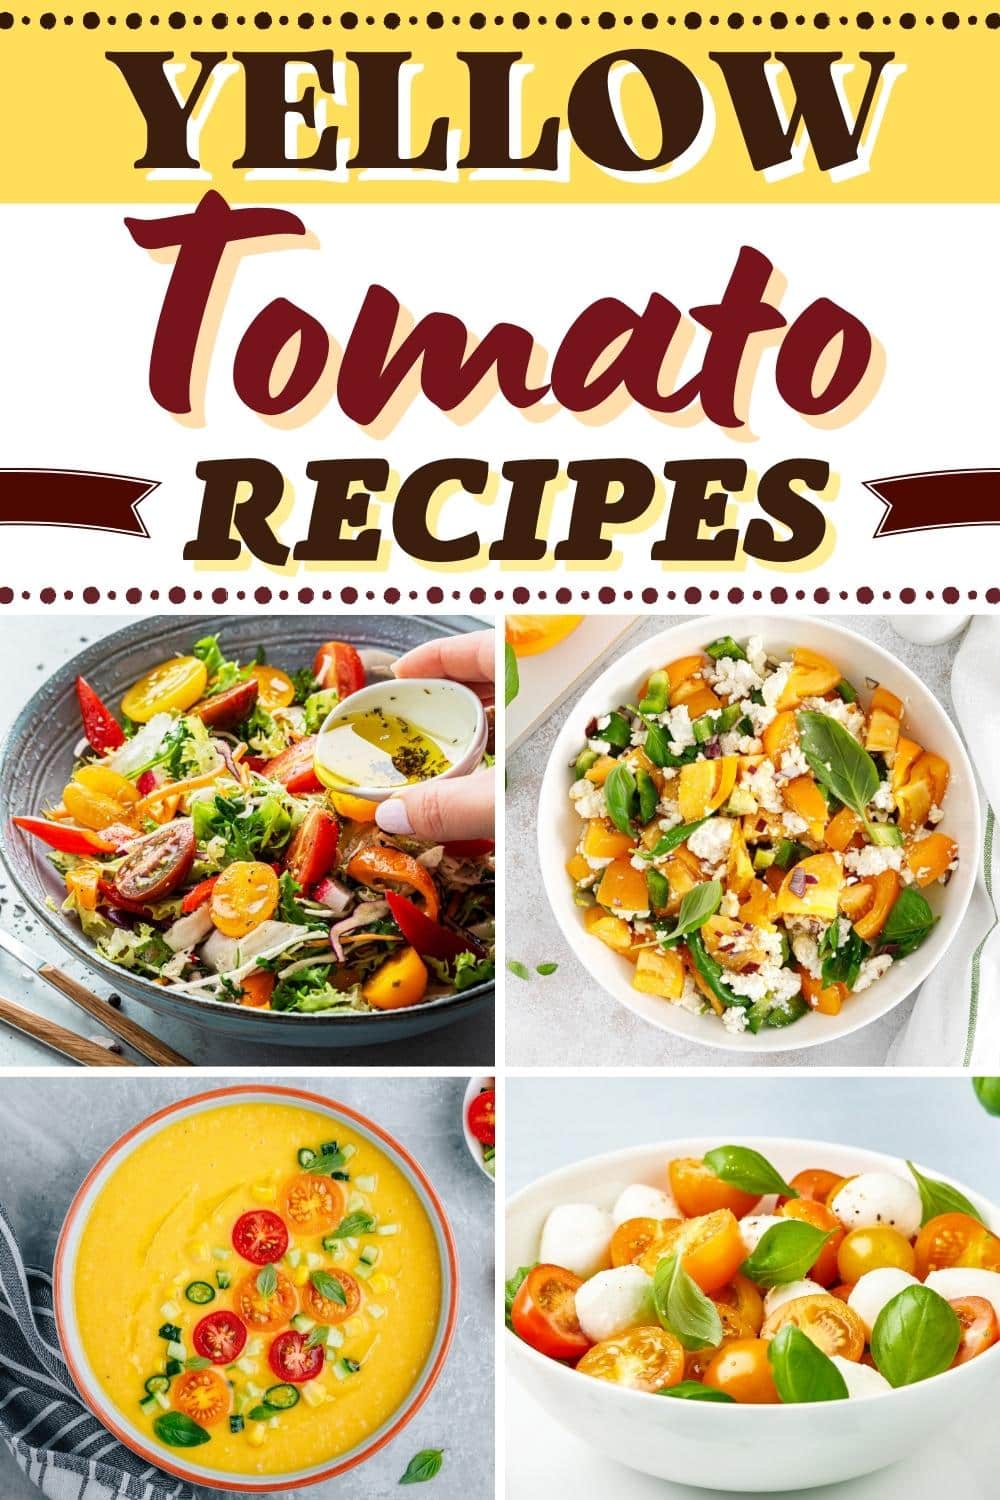 Yellow Tomato Recipes